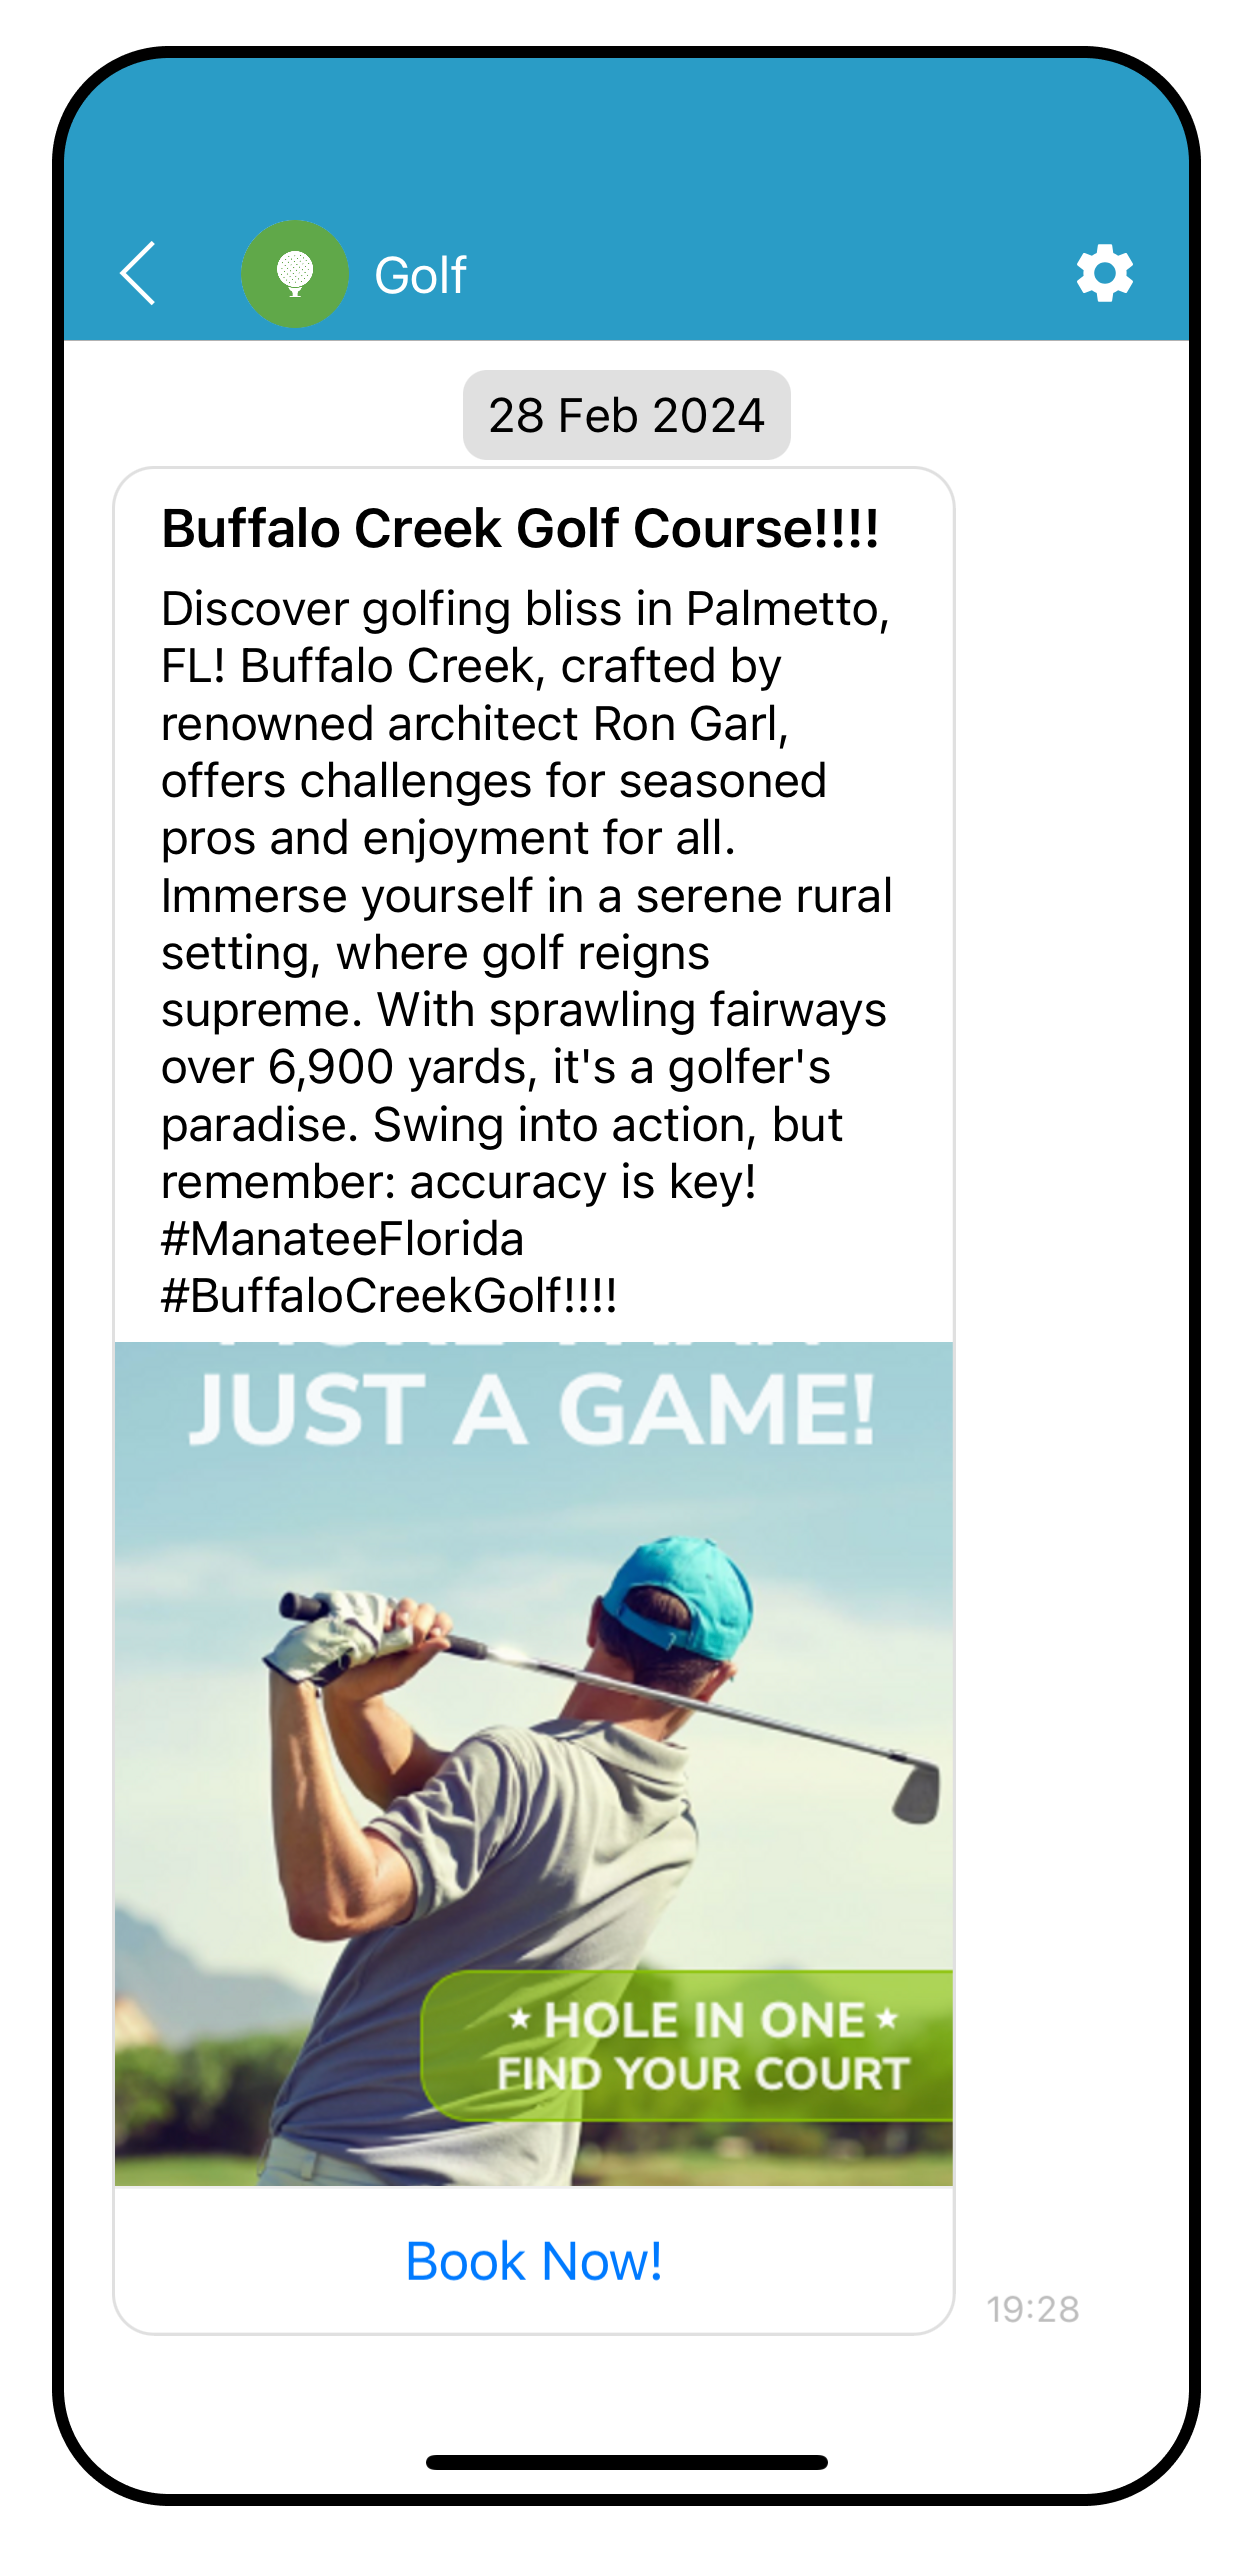 Golf message in app